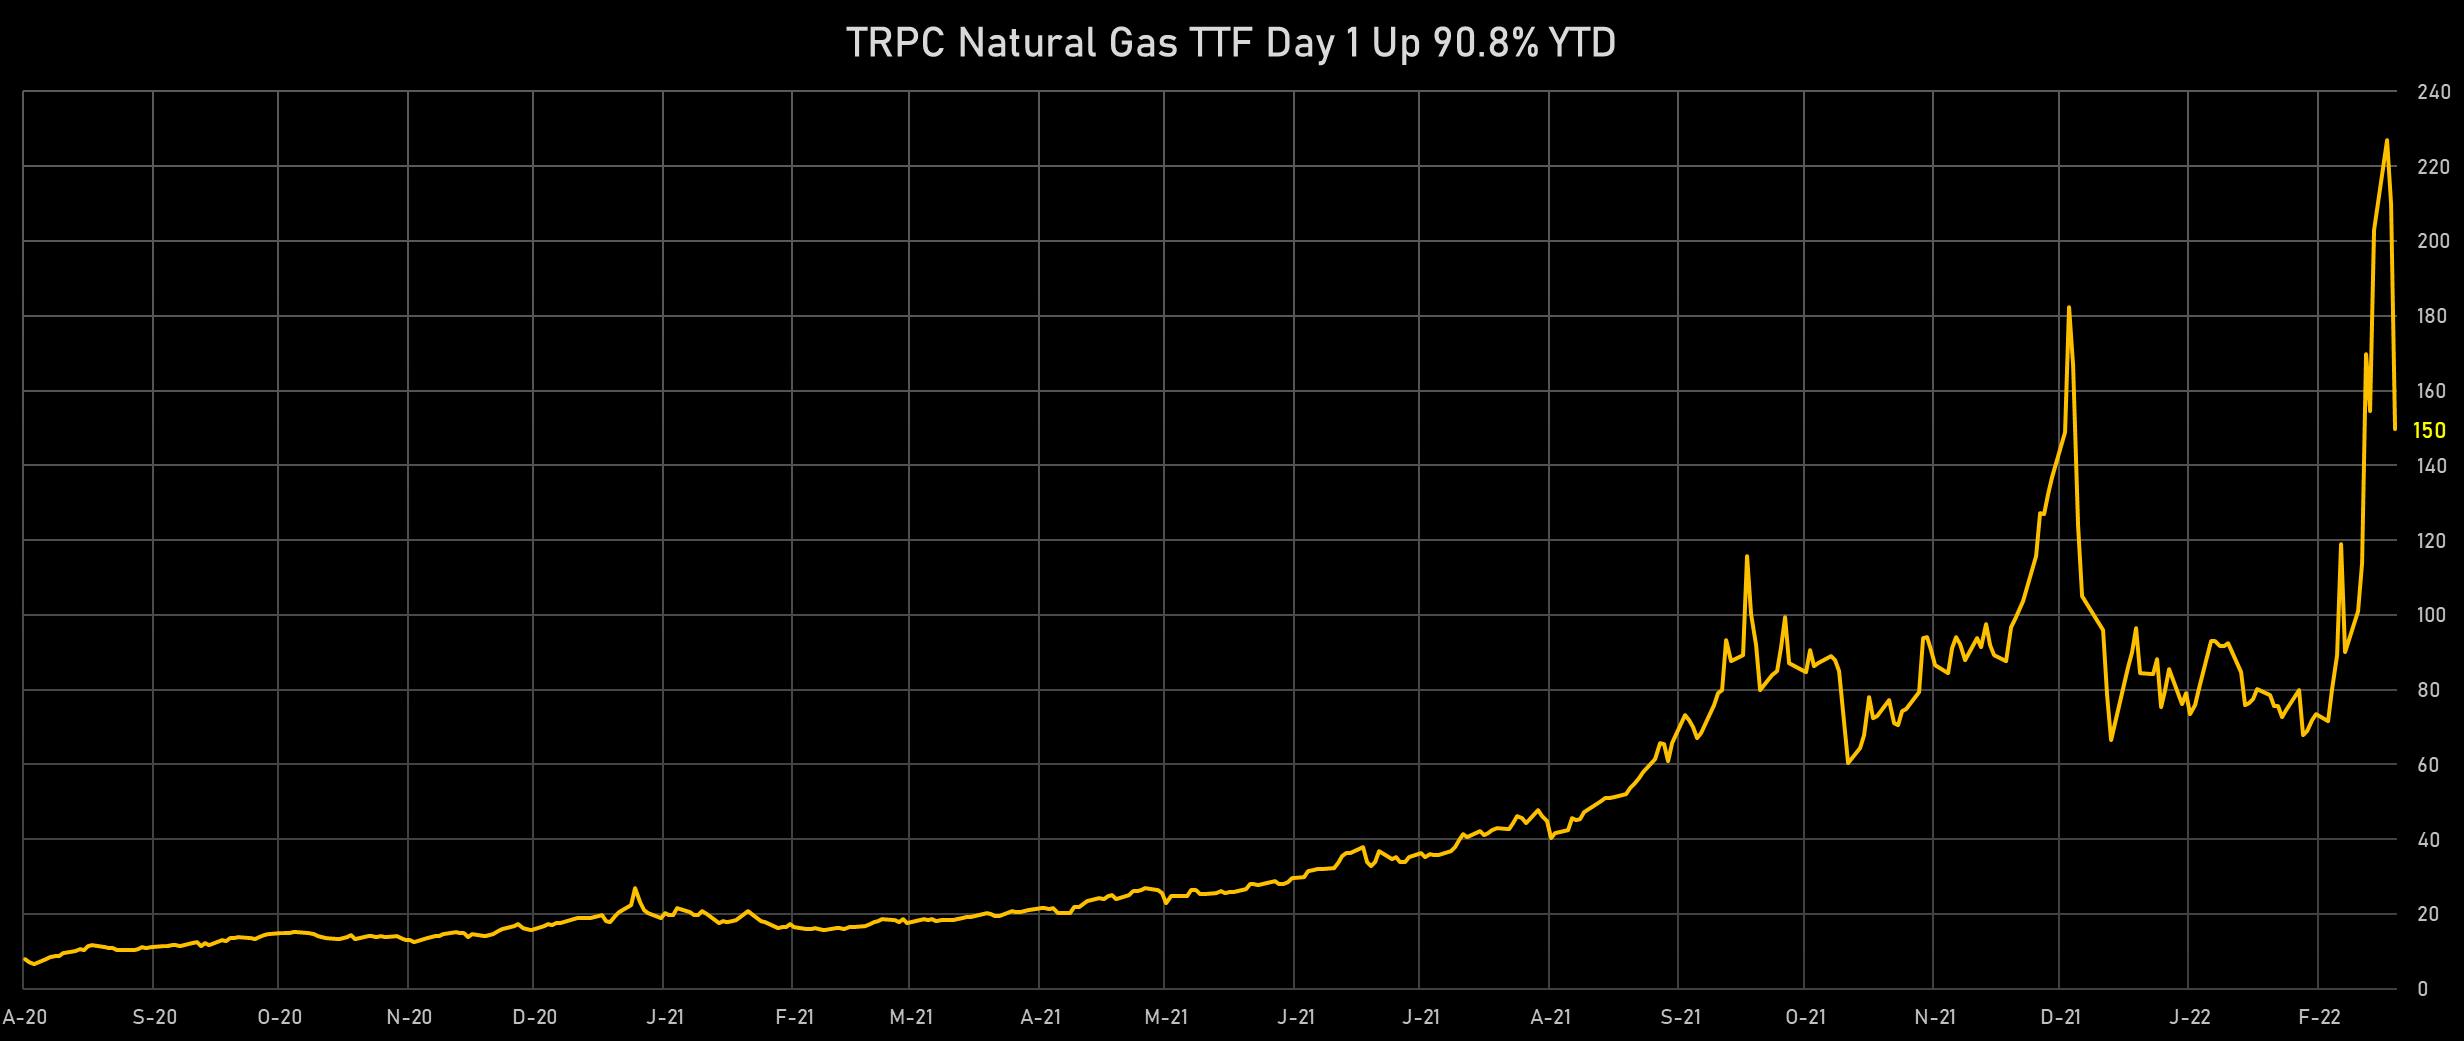 TTF Natural Gas Day 1 | Sources: phipost.com, Refinitiv data